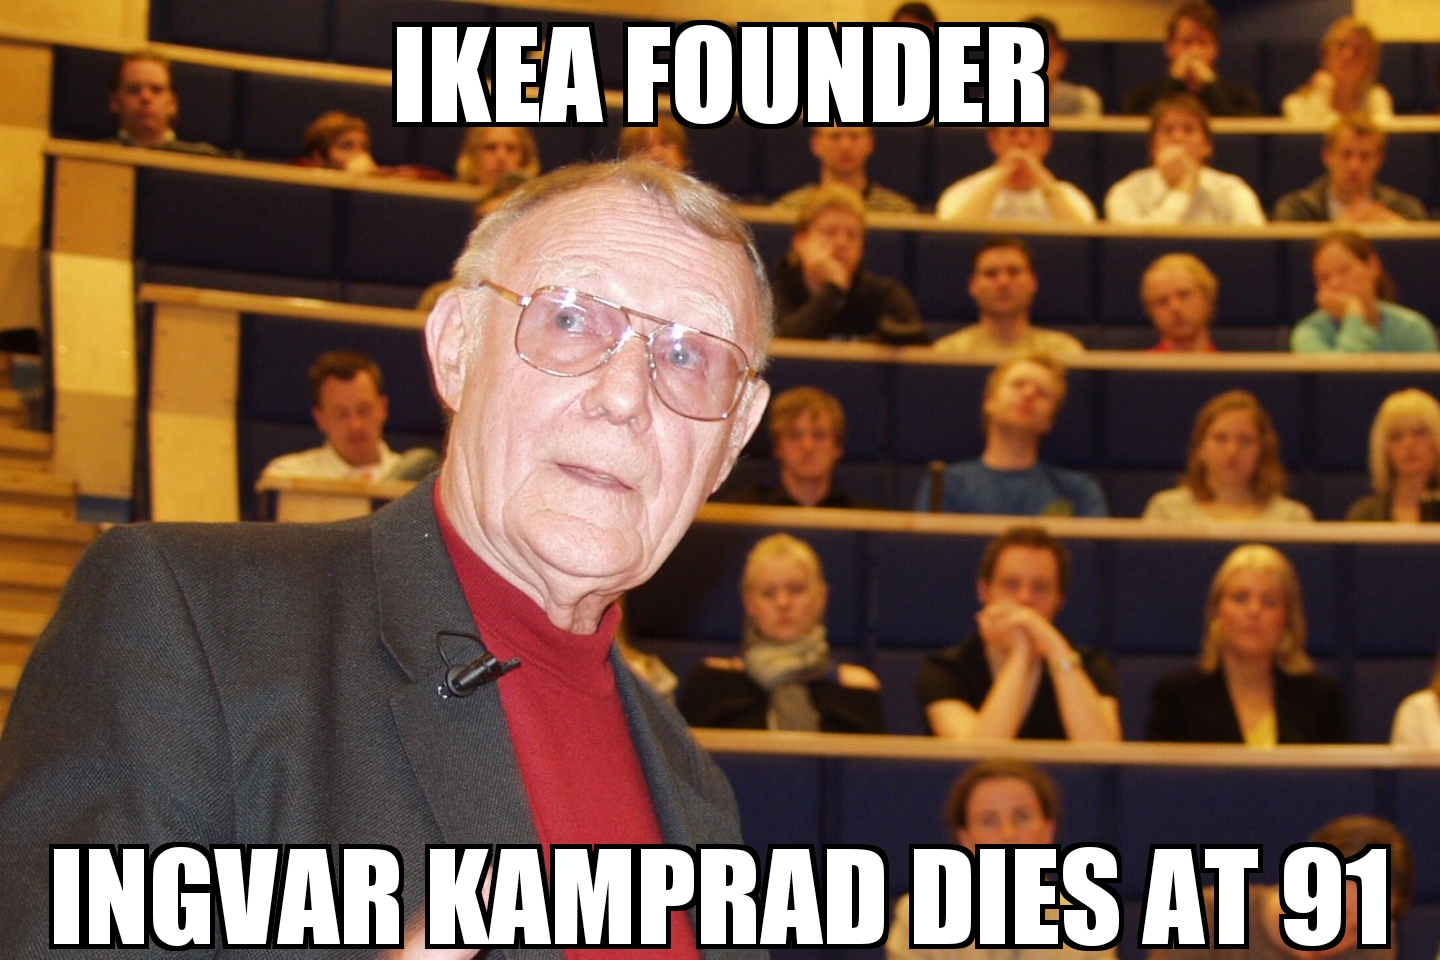 Ikea founder dies